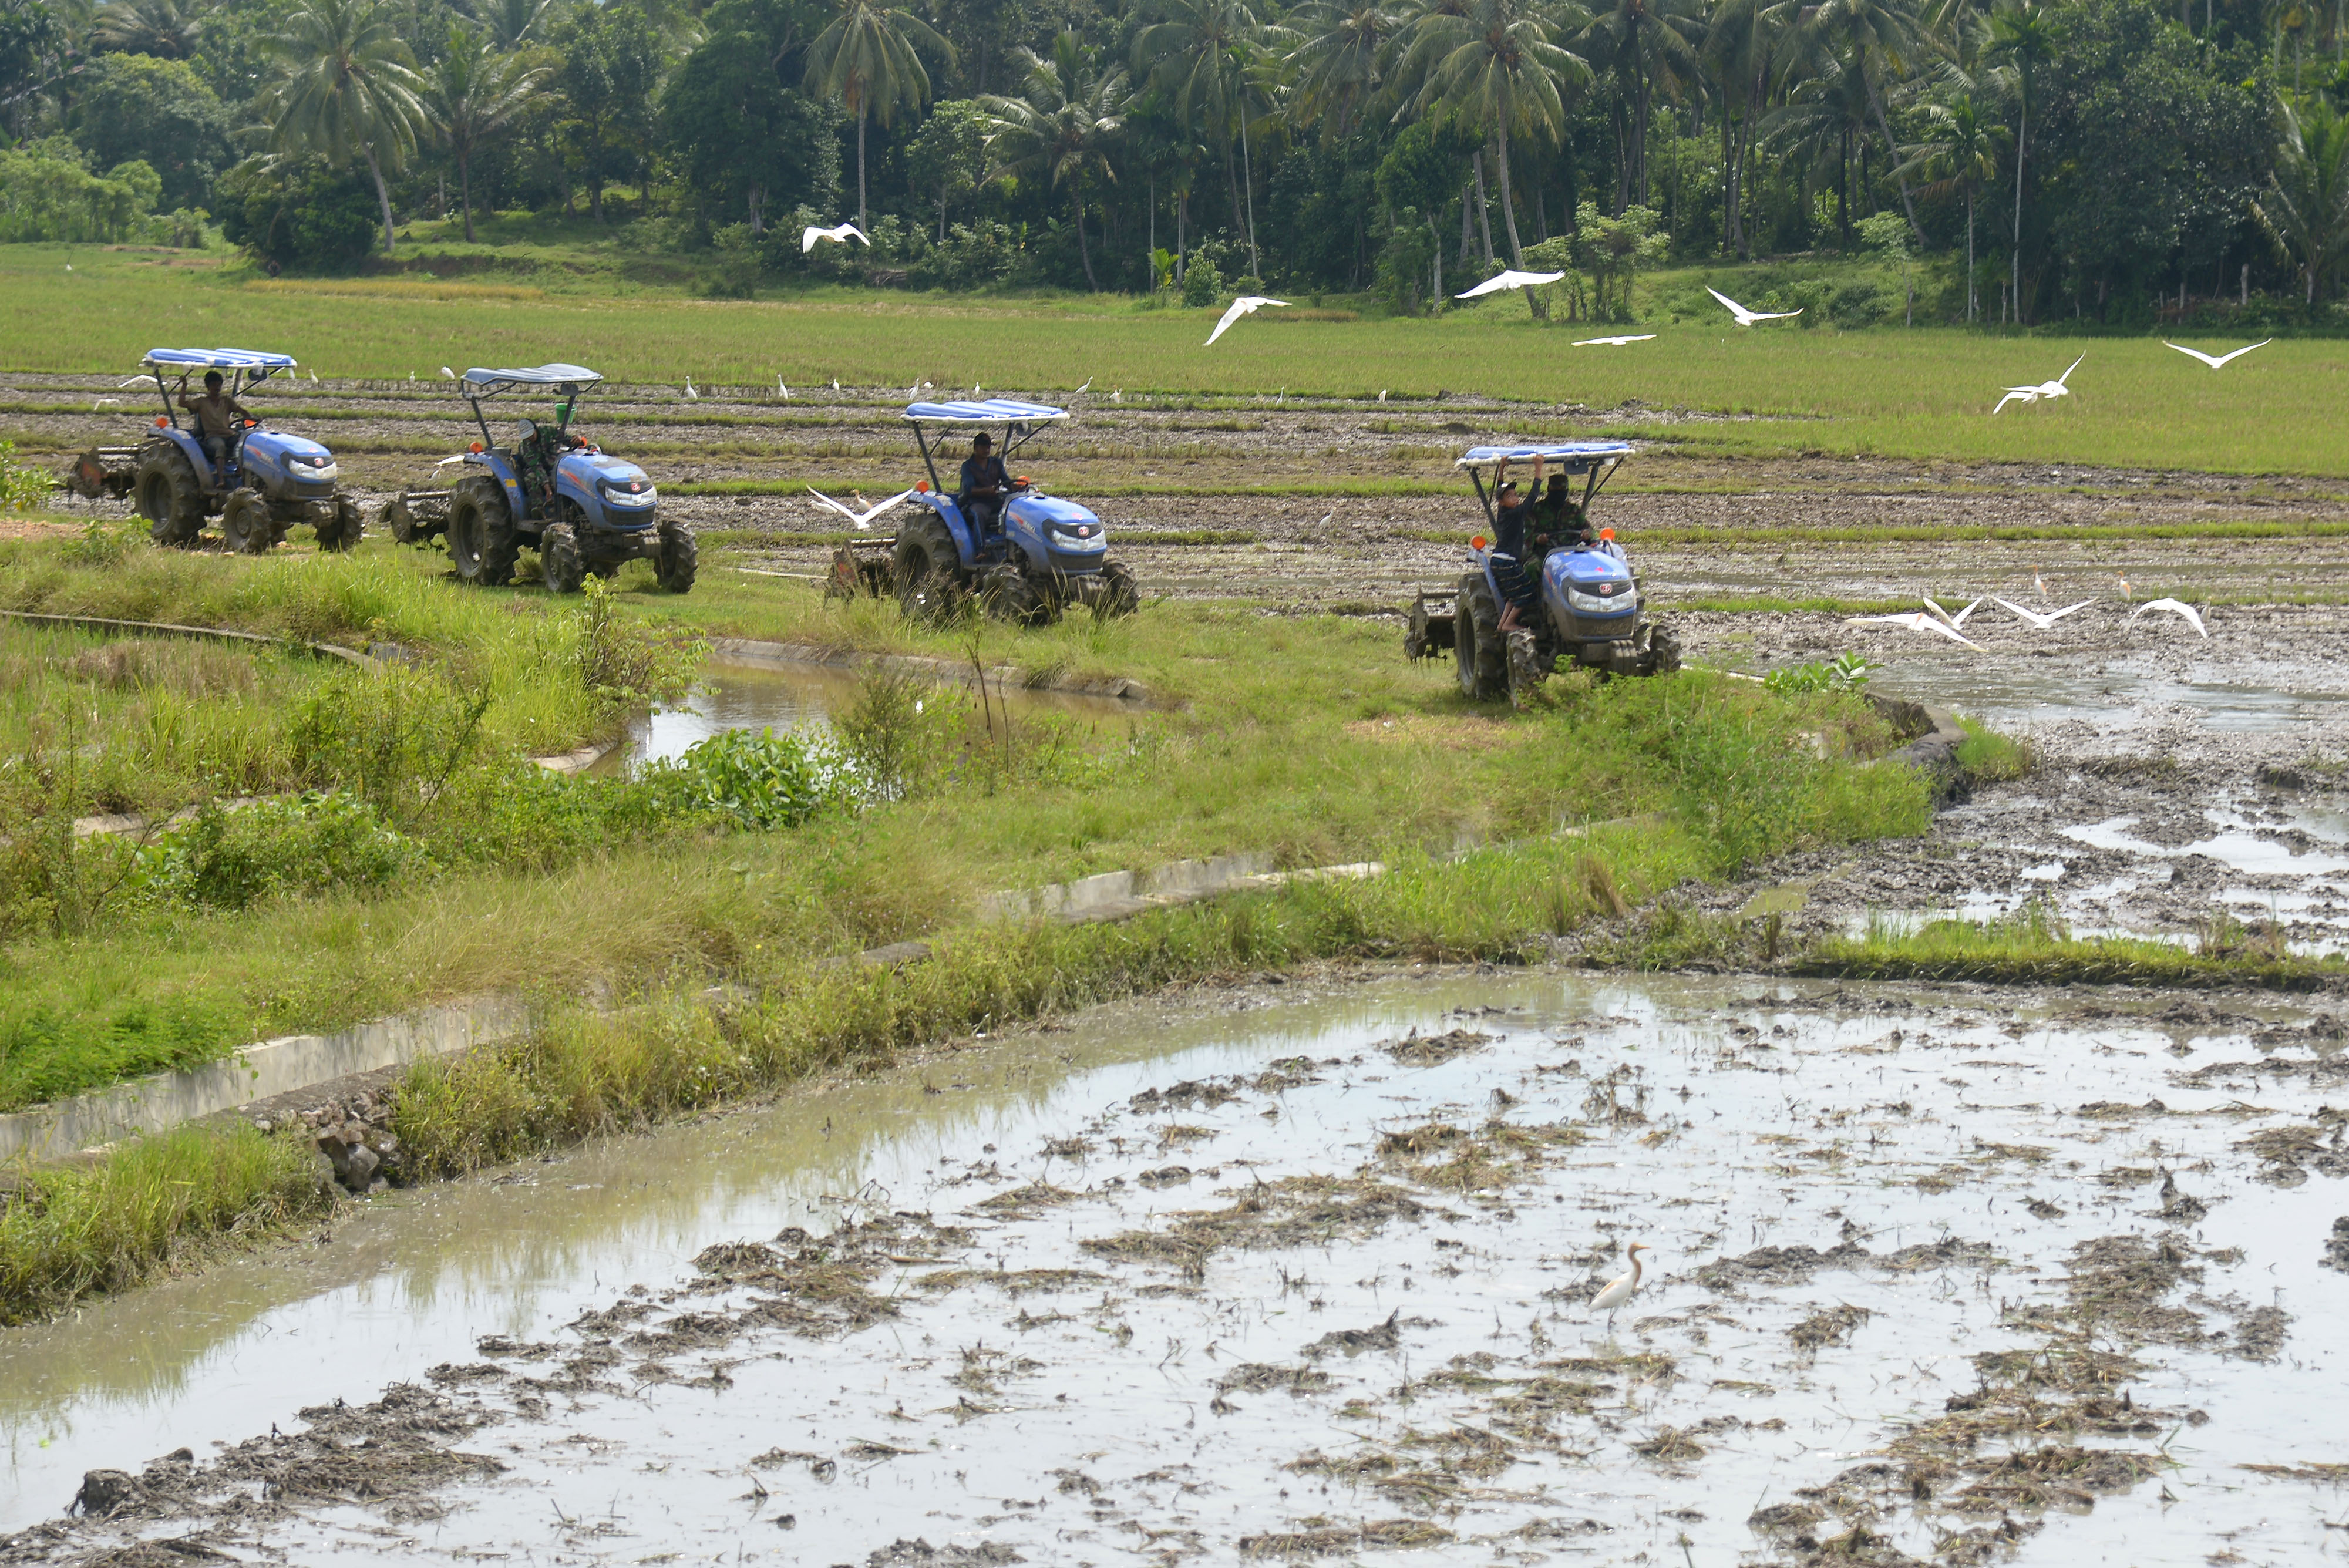 Anggota Babinsa Kodim 0101/BS Kodam Iskandar Muda mengoperasikan traktor untuk membantu petani membajak sawah pada musim tanam serentak tahap kedua di Desa Blang Bintang, Kabupaten Aceh Besar, Aceh, Rabu (6/5/2020). Presiden Joko Widodo mengintruksikan Menteri Pertanian Syahrul Yasin Limpo untuk mempercepat musim tanam tahap kedua dengan memanfaatkan musim hujan yang masih berlangsung Mei hingga Juni dengan target tanaman padi seluas 5,6 juta hektare, dan produksi sebanyak 20 juta ton gabah kering giling (GKG). Foto Antara/Ampelsa/aww.